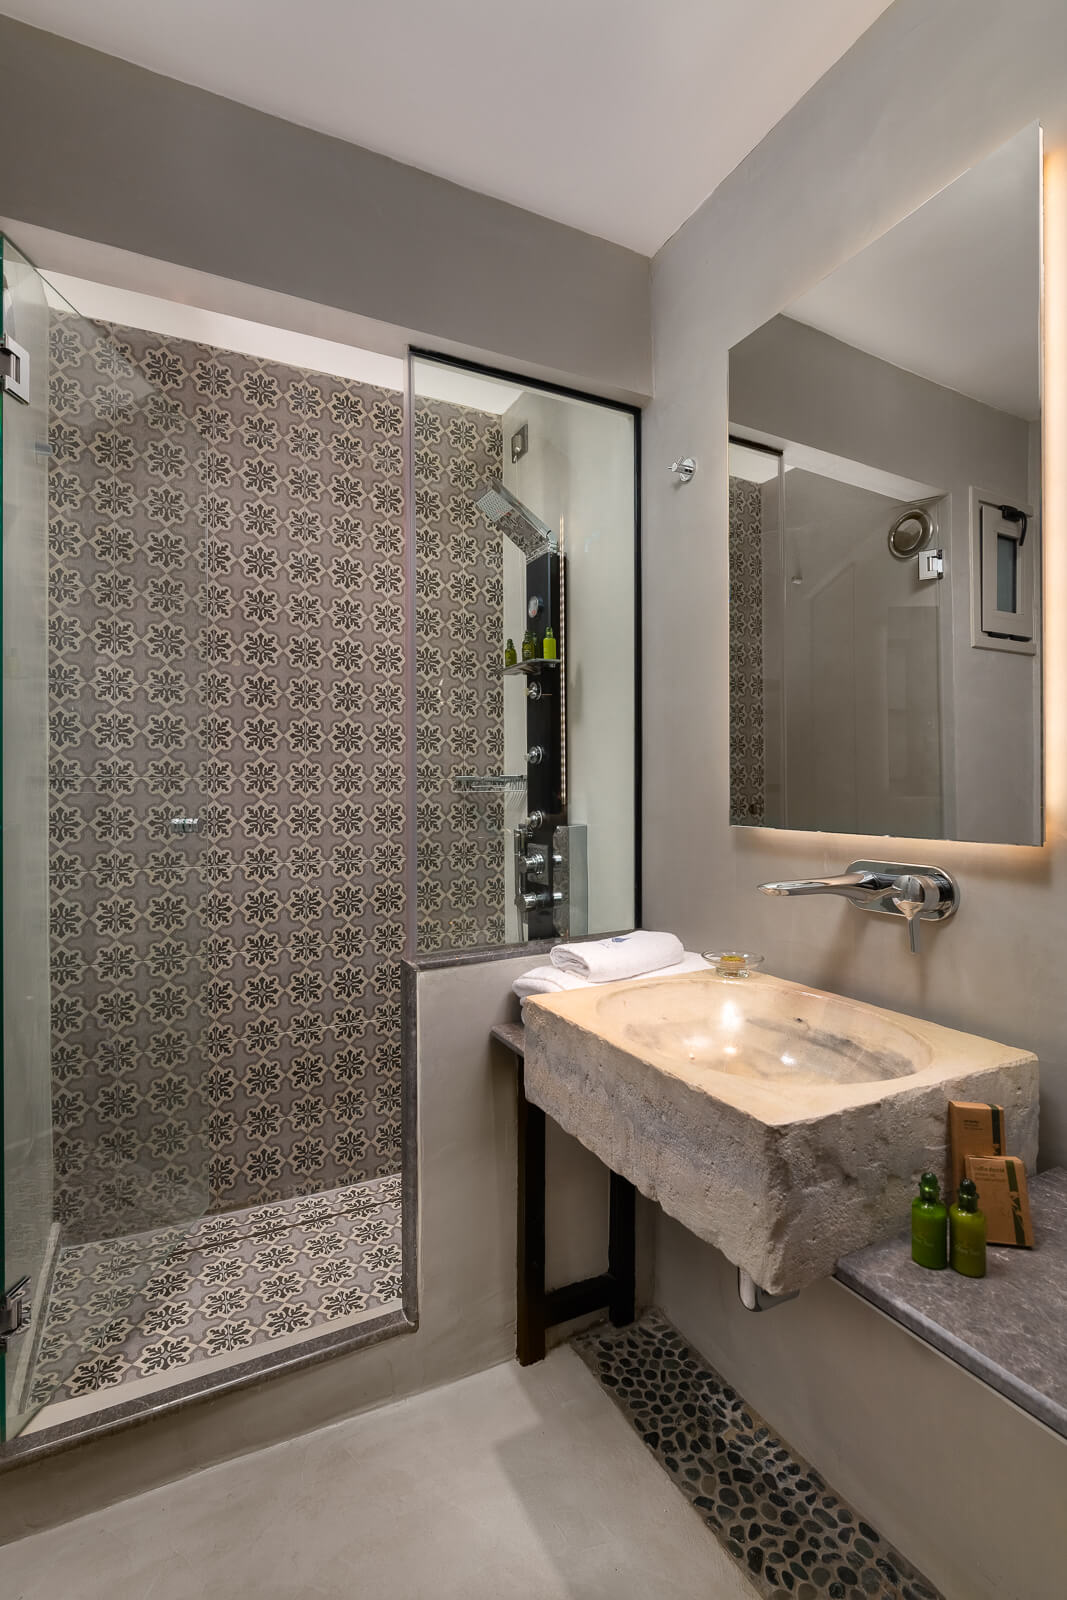 Vrachos Hotel Bathroom - Elakati Best Hotel in Rhodes Greece